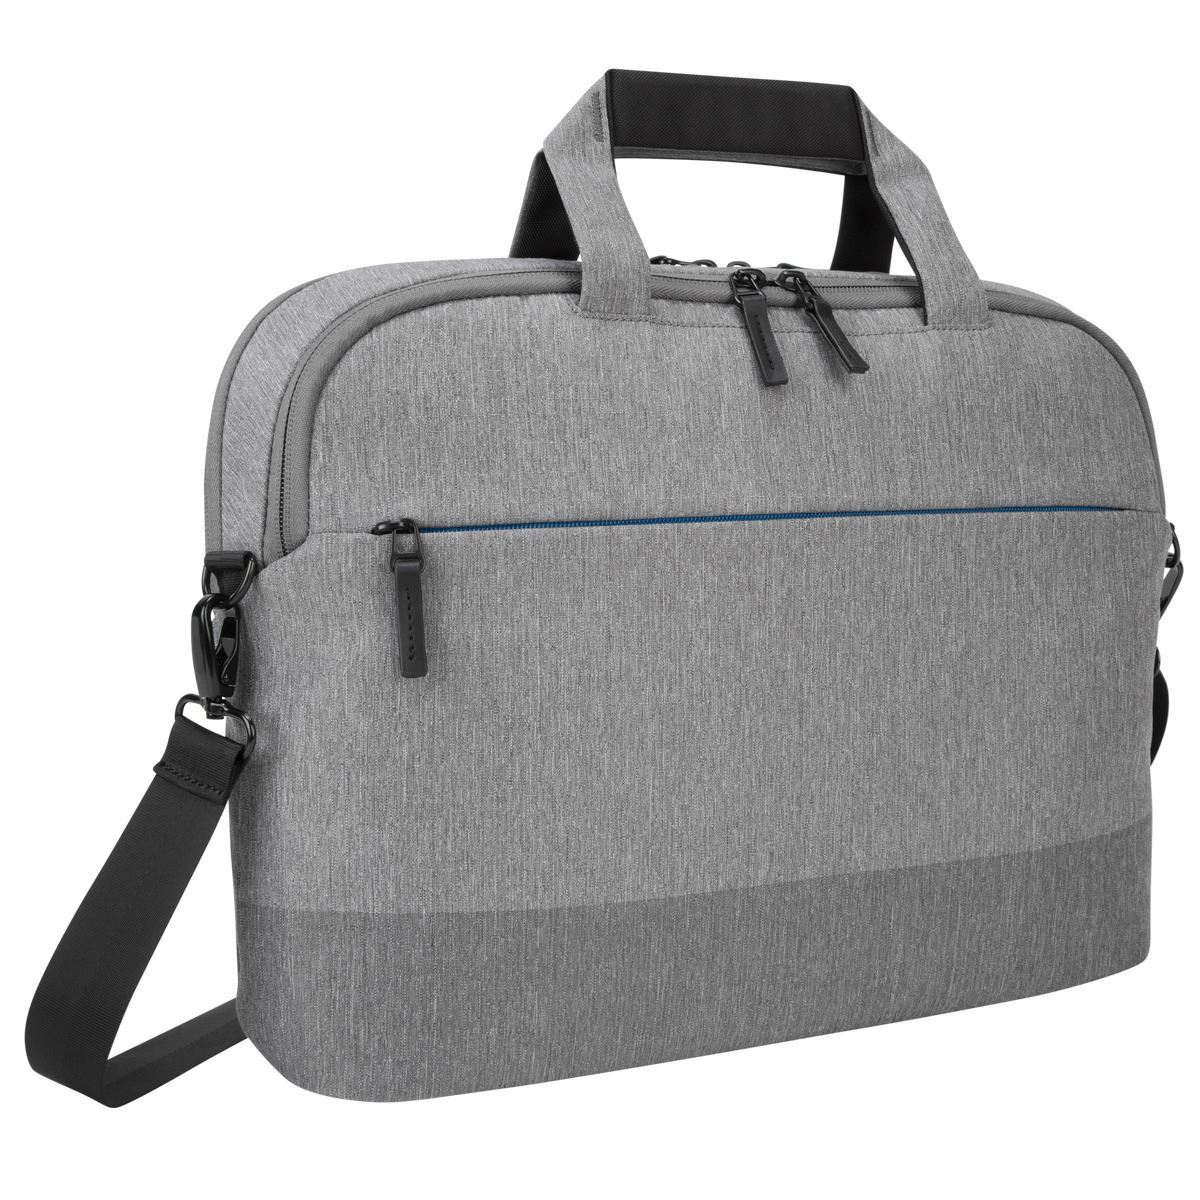 Eerste moreel Absoluut CityLite laptop bag best for work, commute or university, fits up to 15.6”  Laptop – Grey